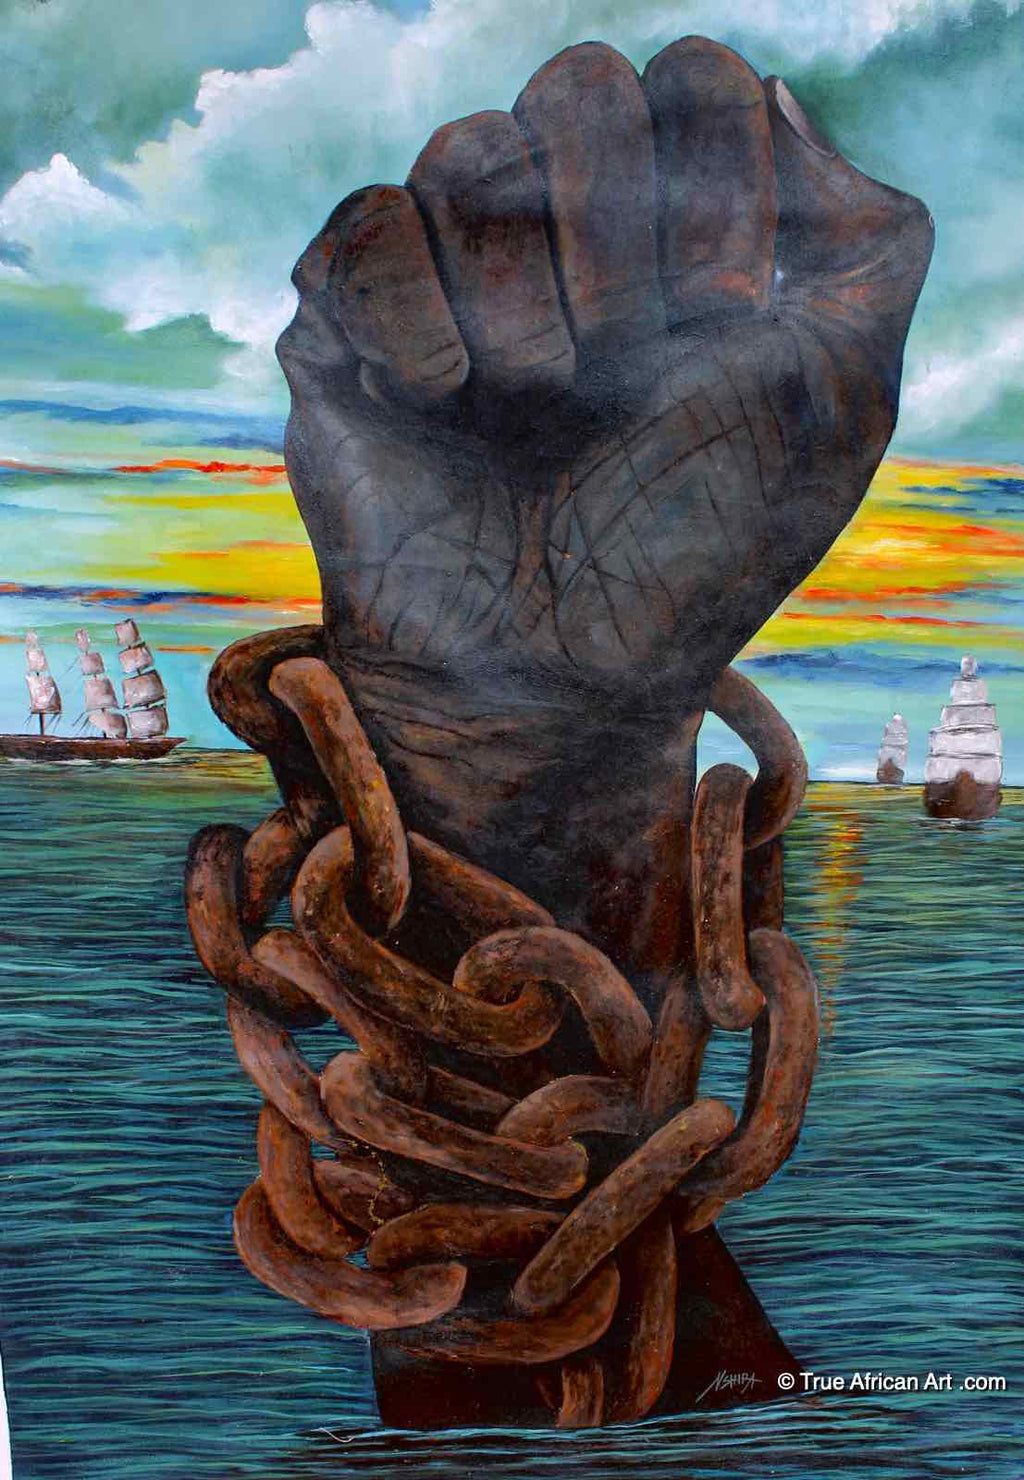 Daniel "Nshira" Akortia  |  Ghana  |  "Black Power"  |  Original  |  True African Art .com